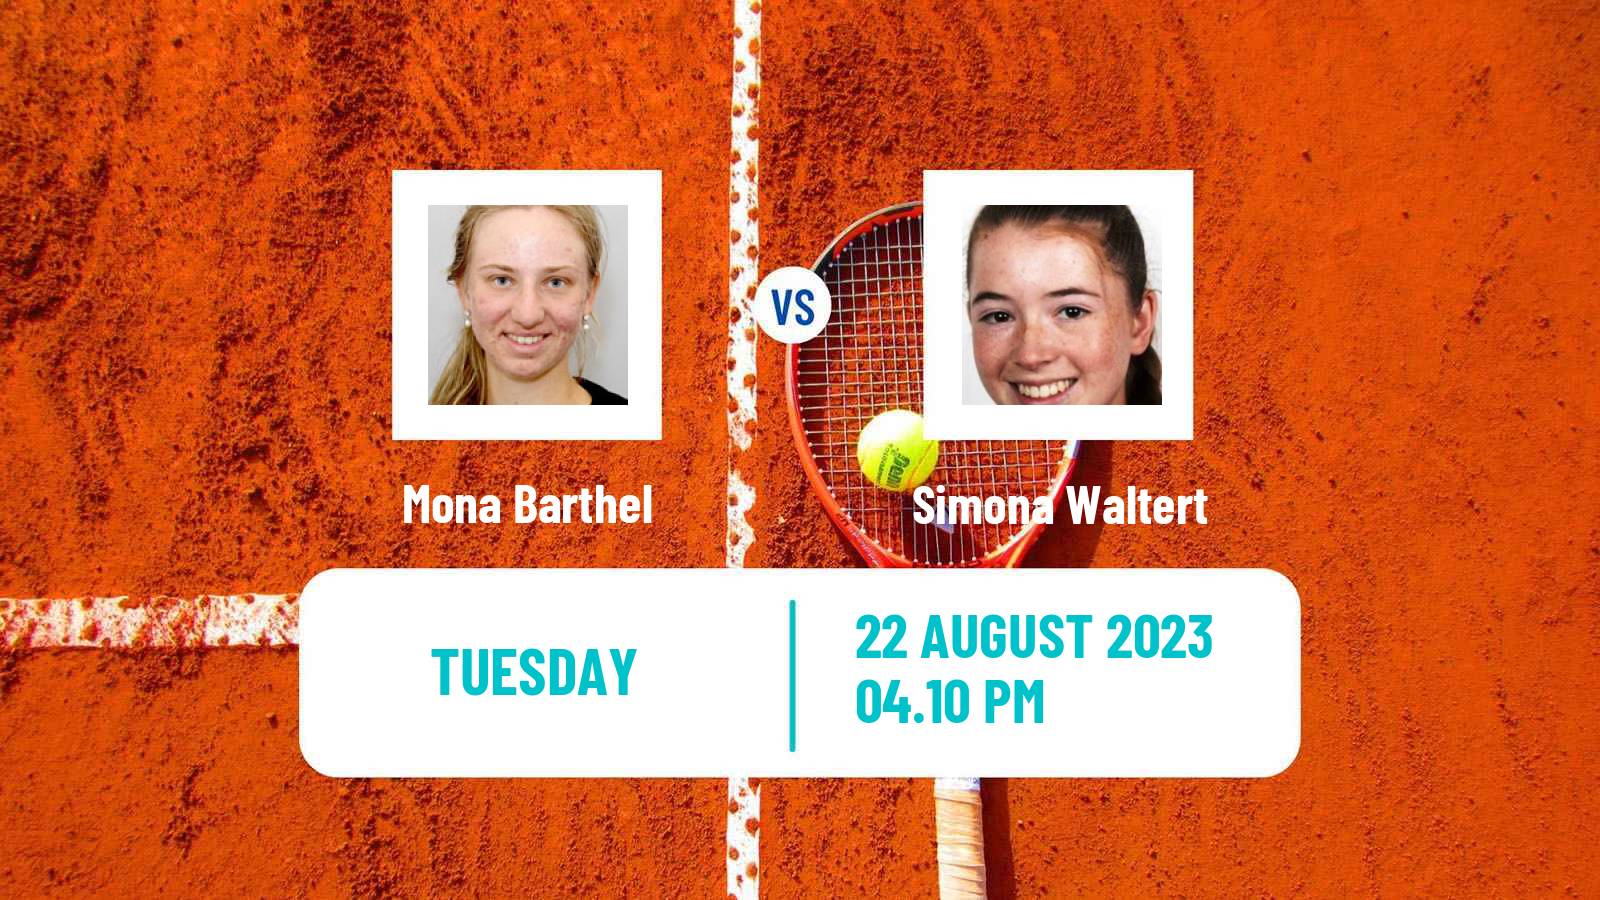 Tennis WTA US Open Mona Barthel - Simona Waltert